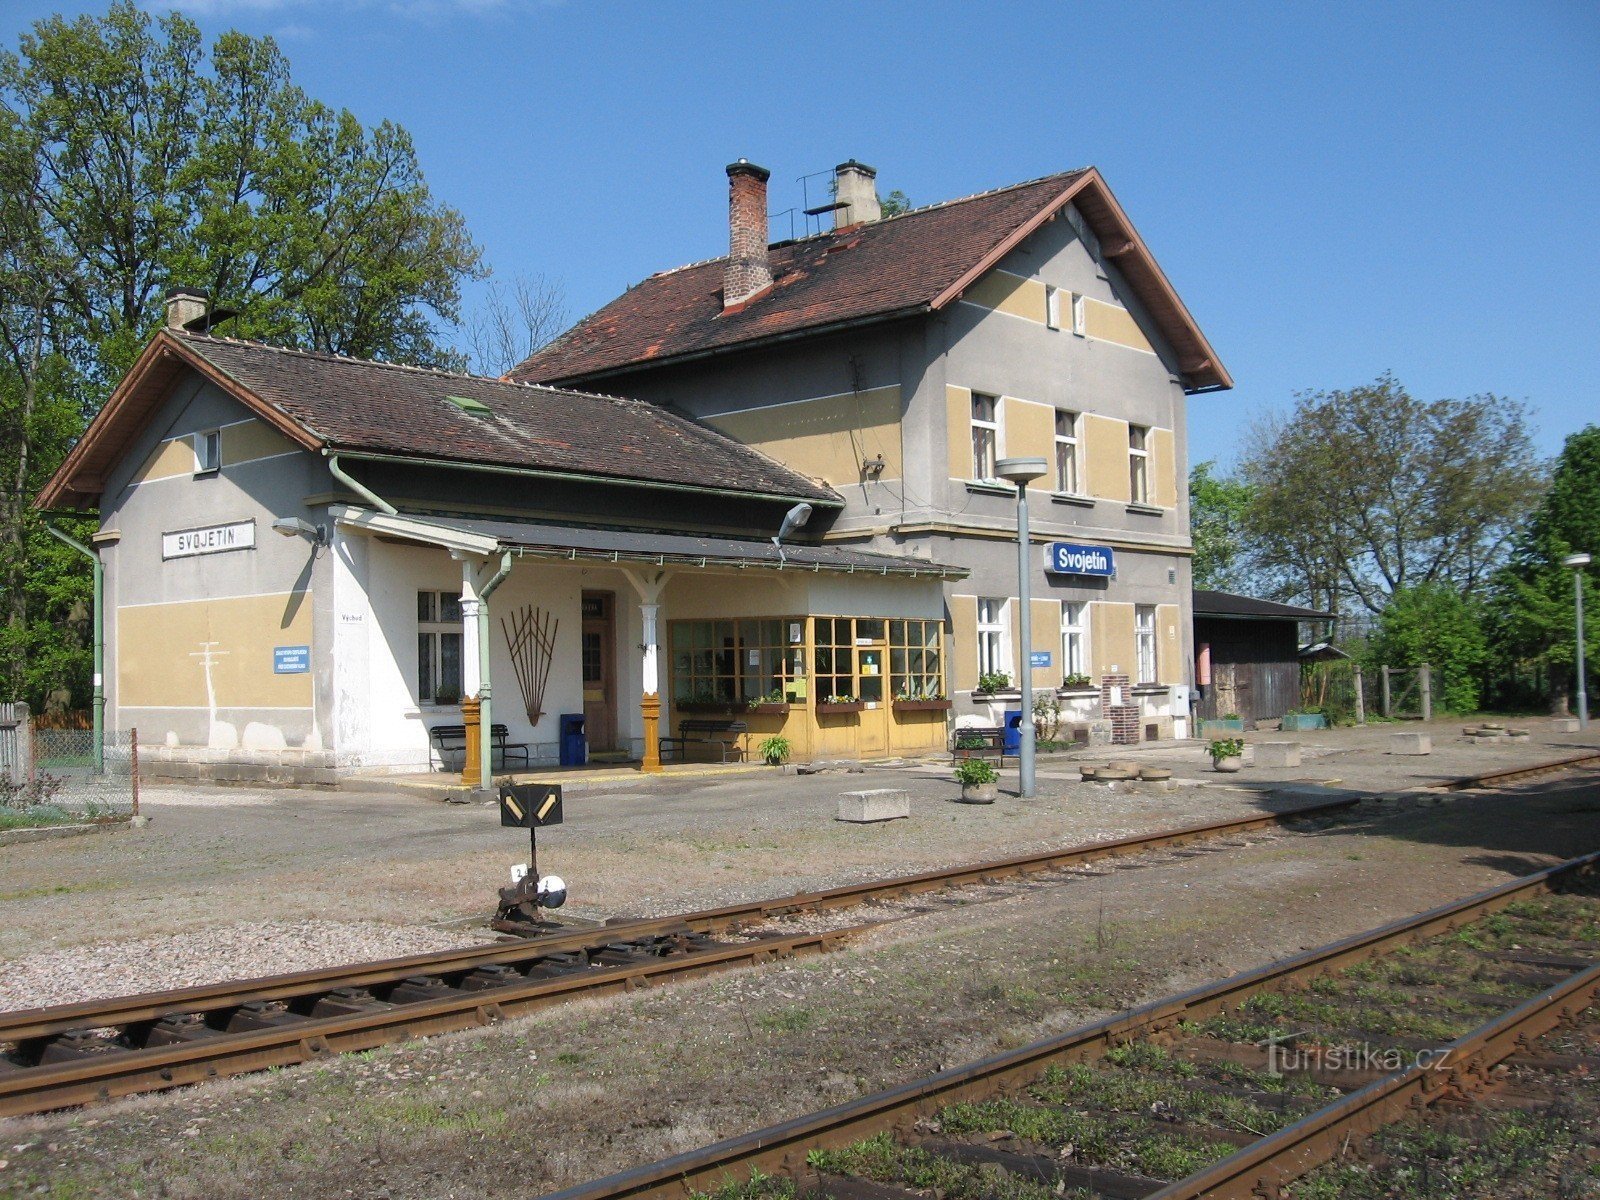 Dworzec Svojetín